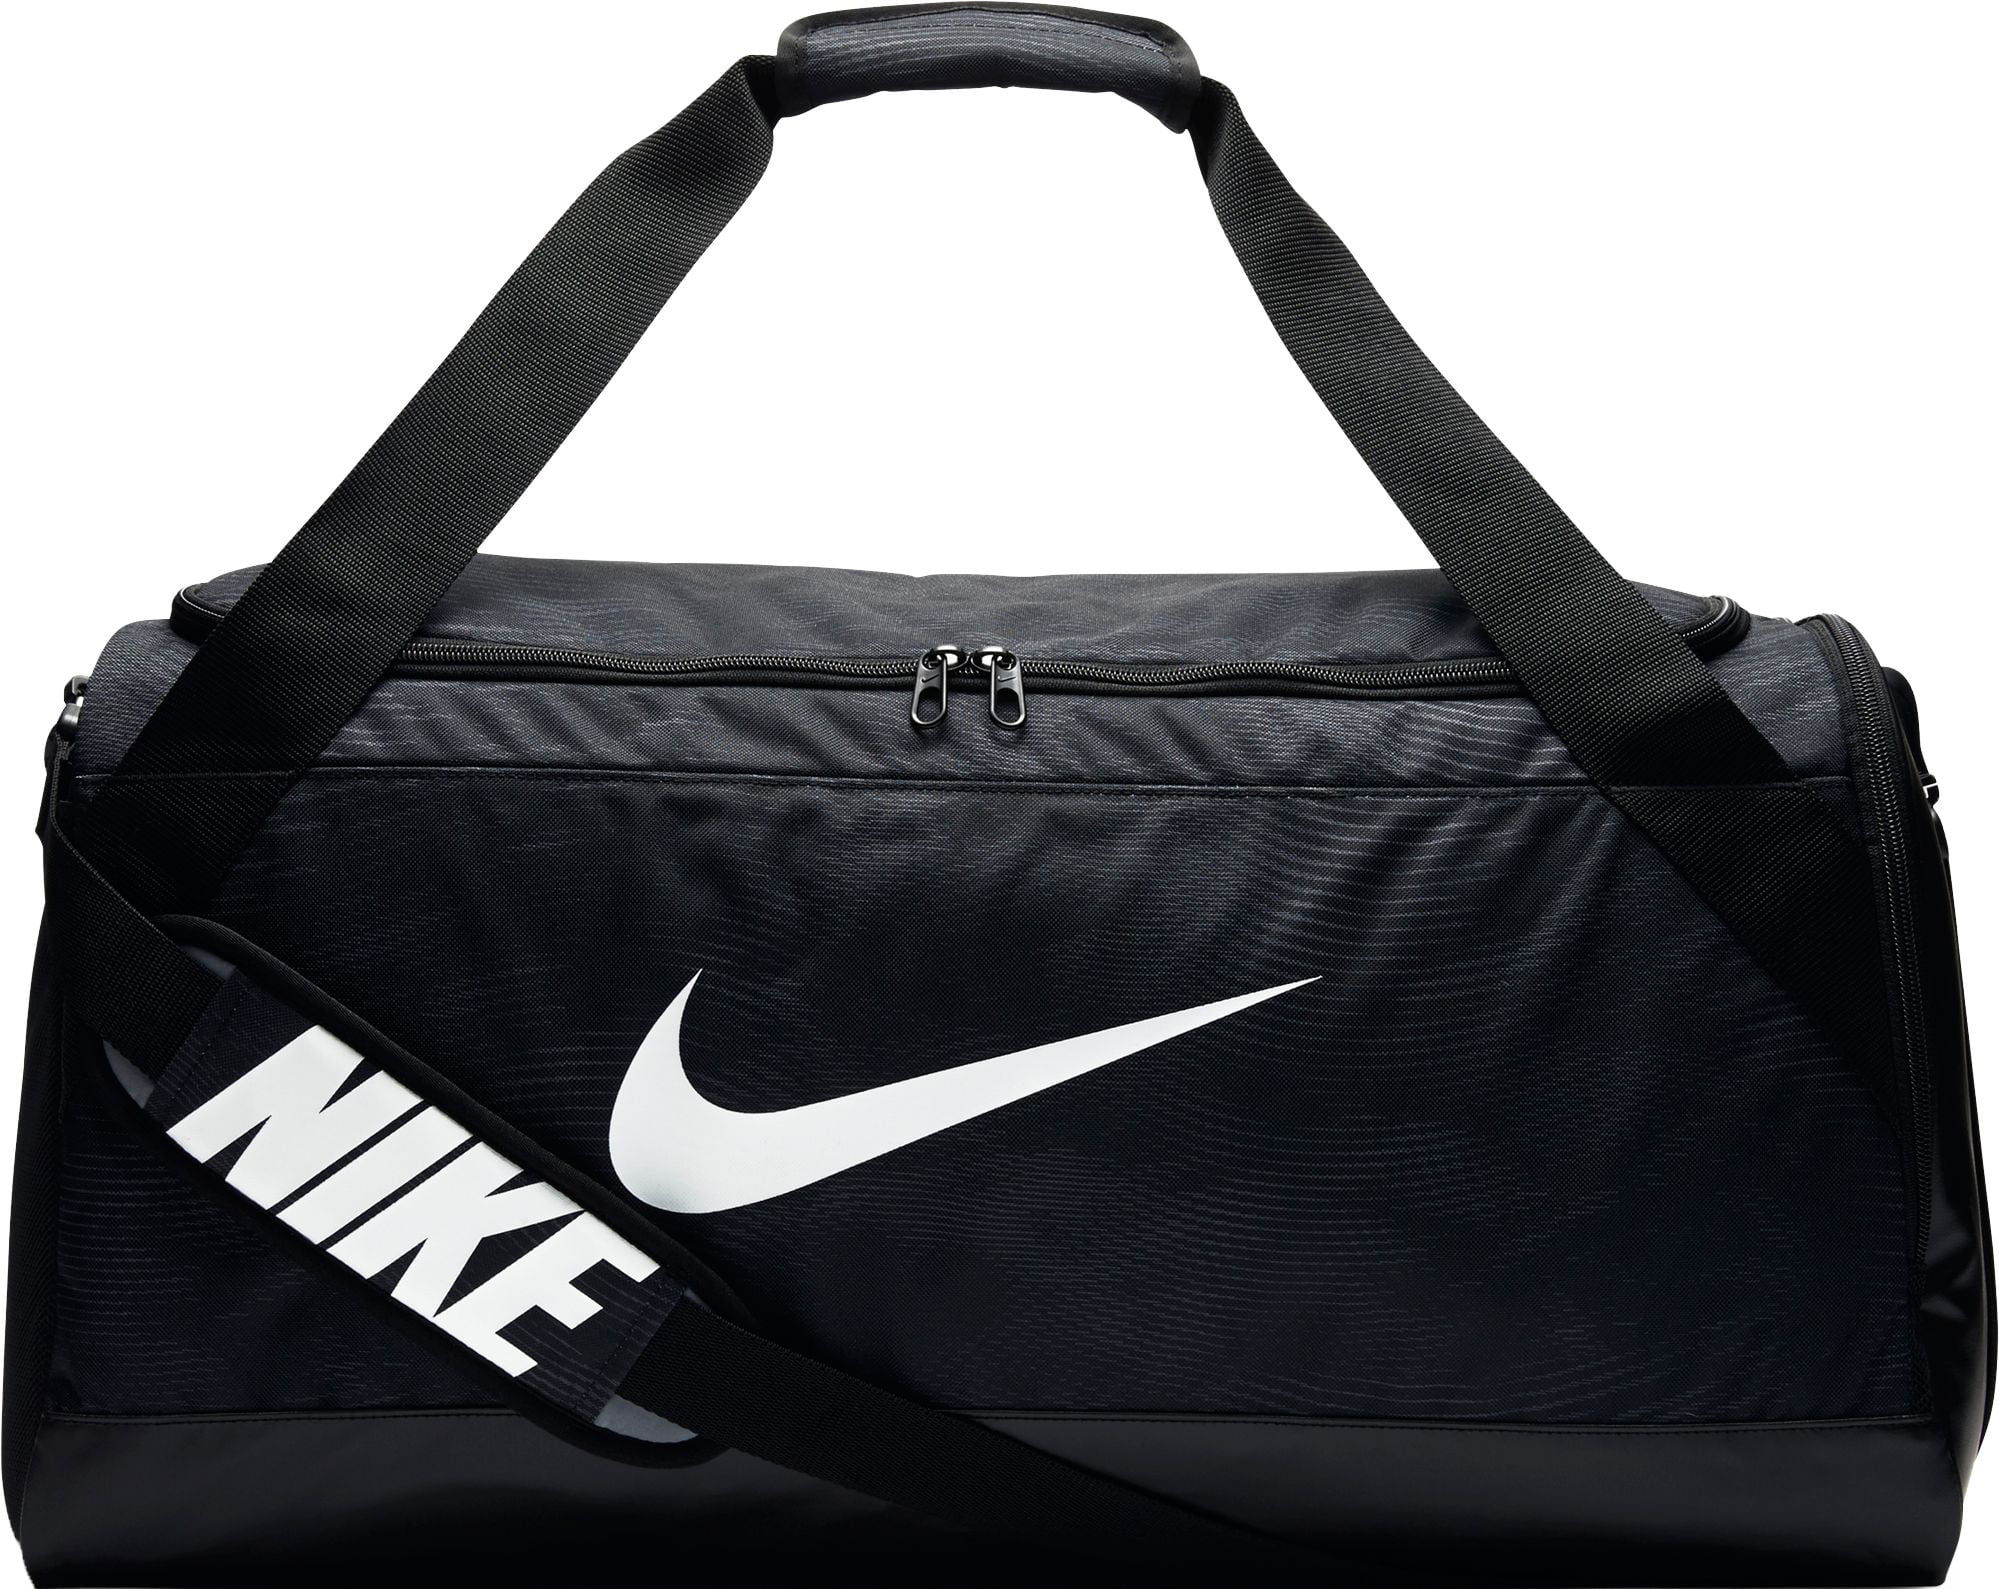 Nike Brasilia Medium Duffle Bag Black/Black/White - Walmart.com ...